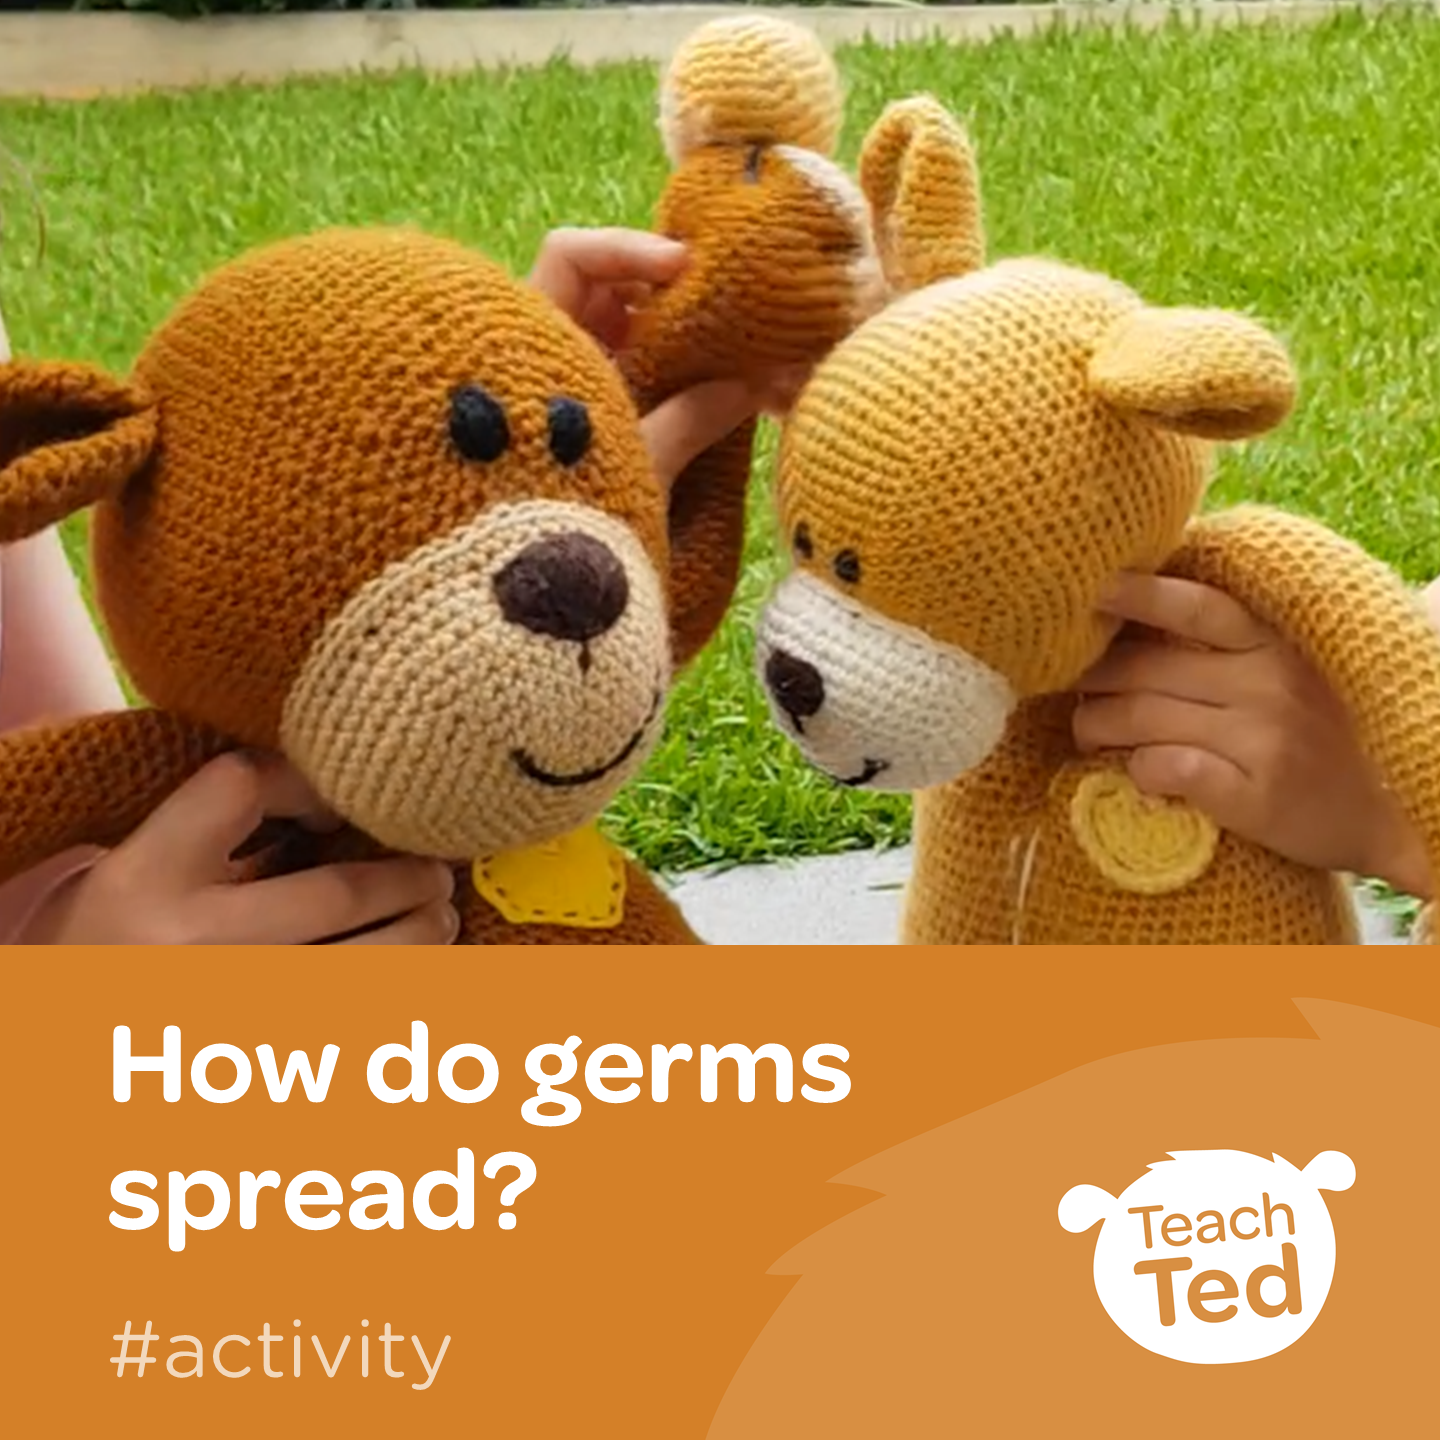 How do germs spread?